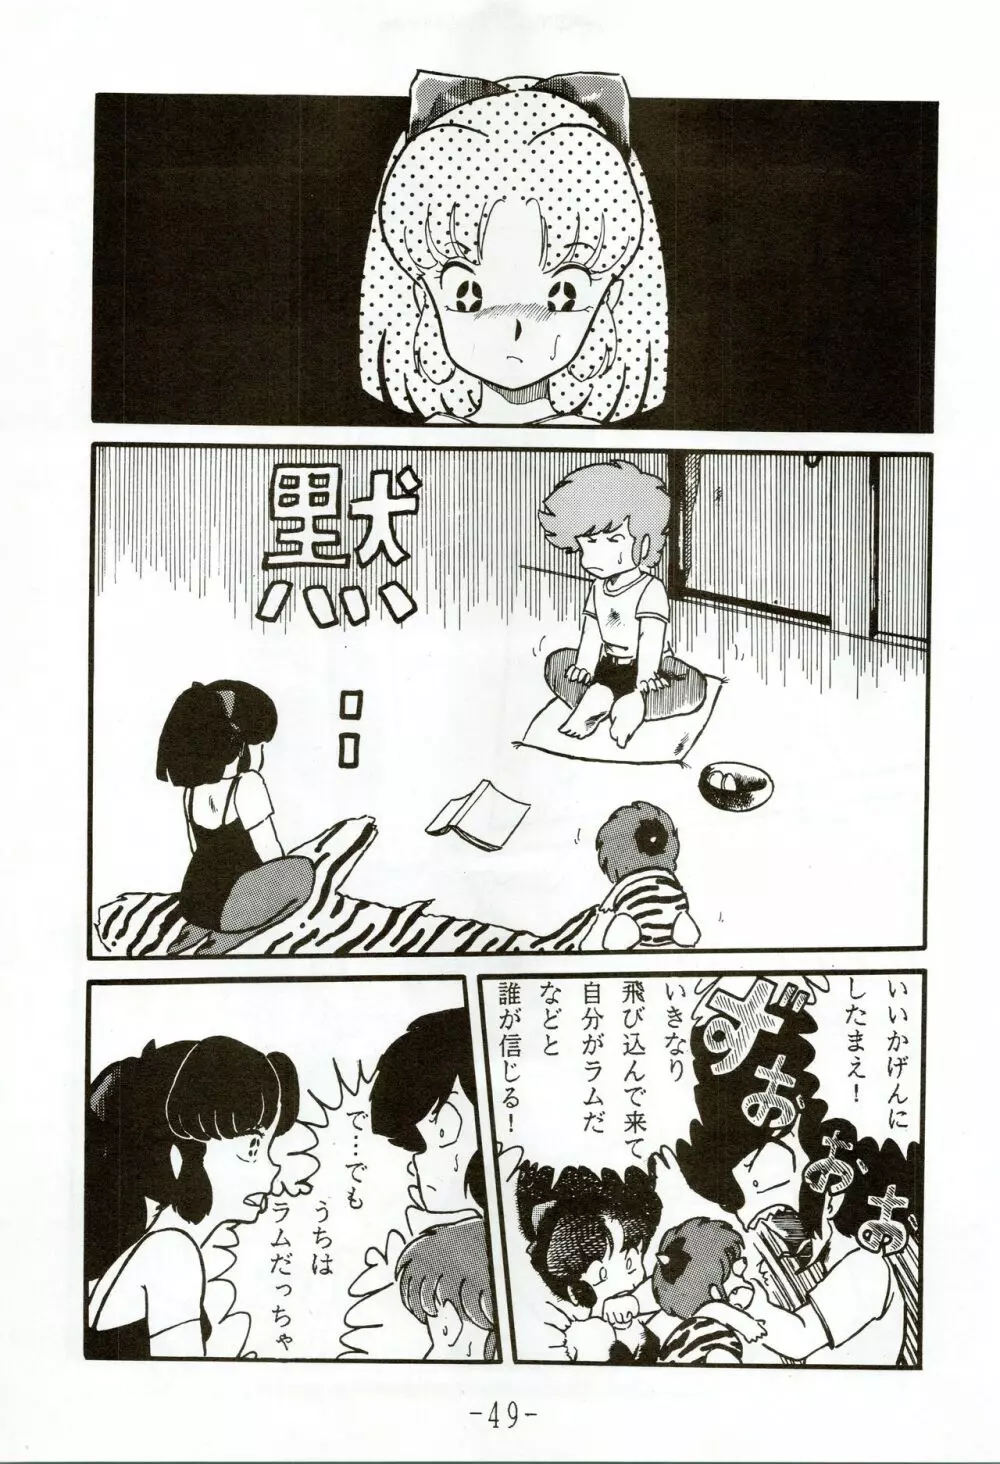 甲冑伝説 - page49